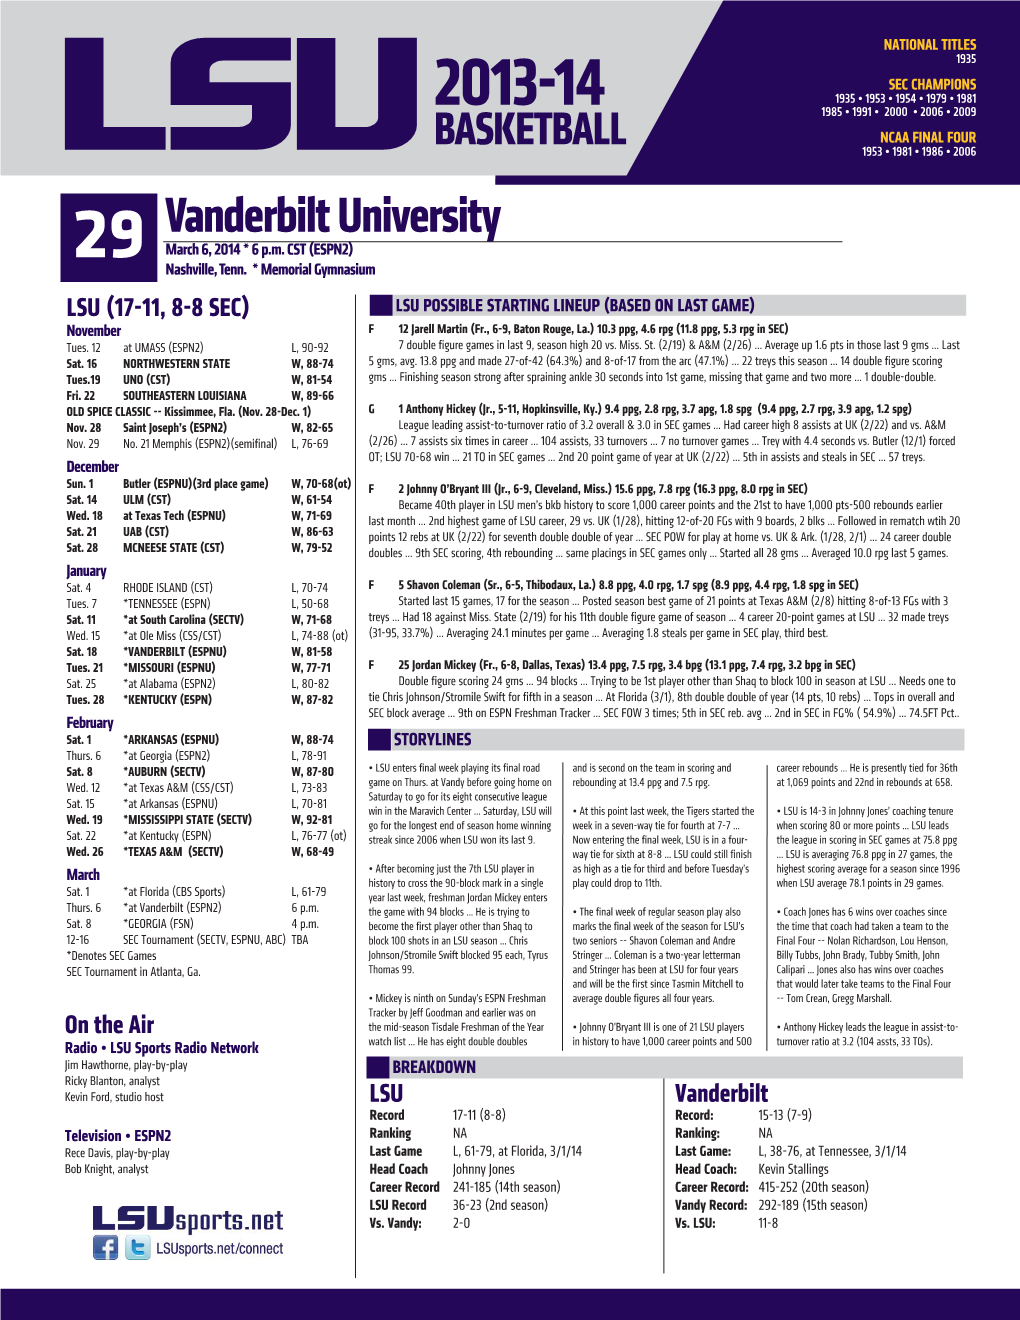 LSU 1953 • 1981 • 1986 • 2006 Vanderbilt University 29 March 6, 2014 * 6 P.M